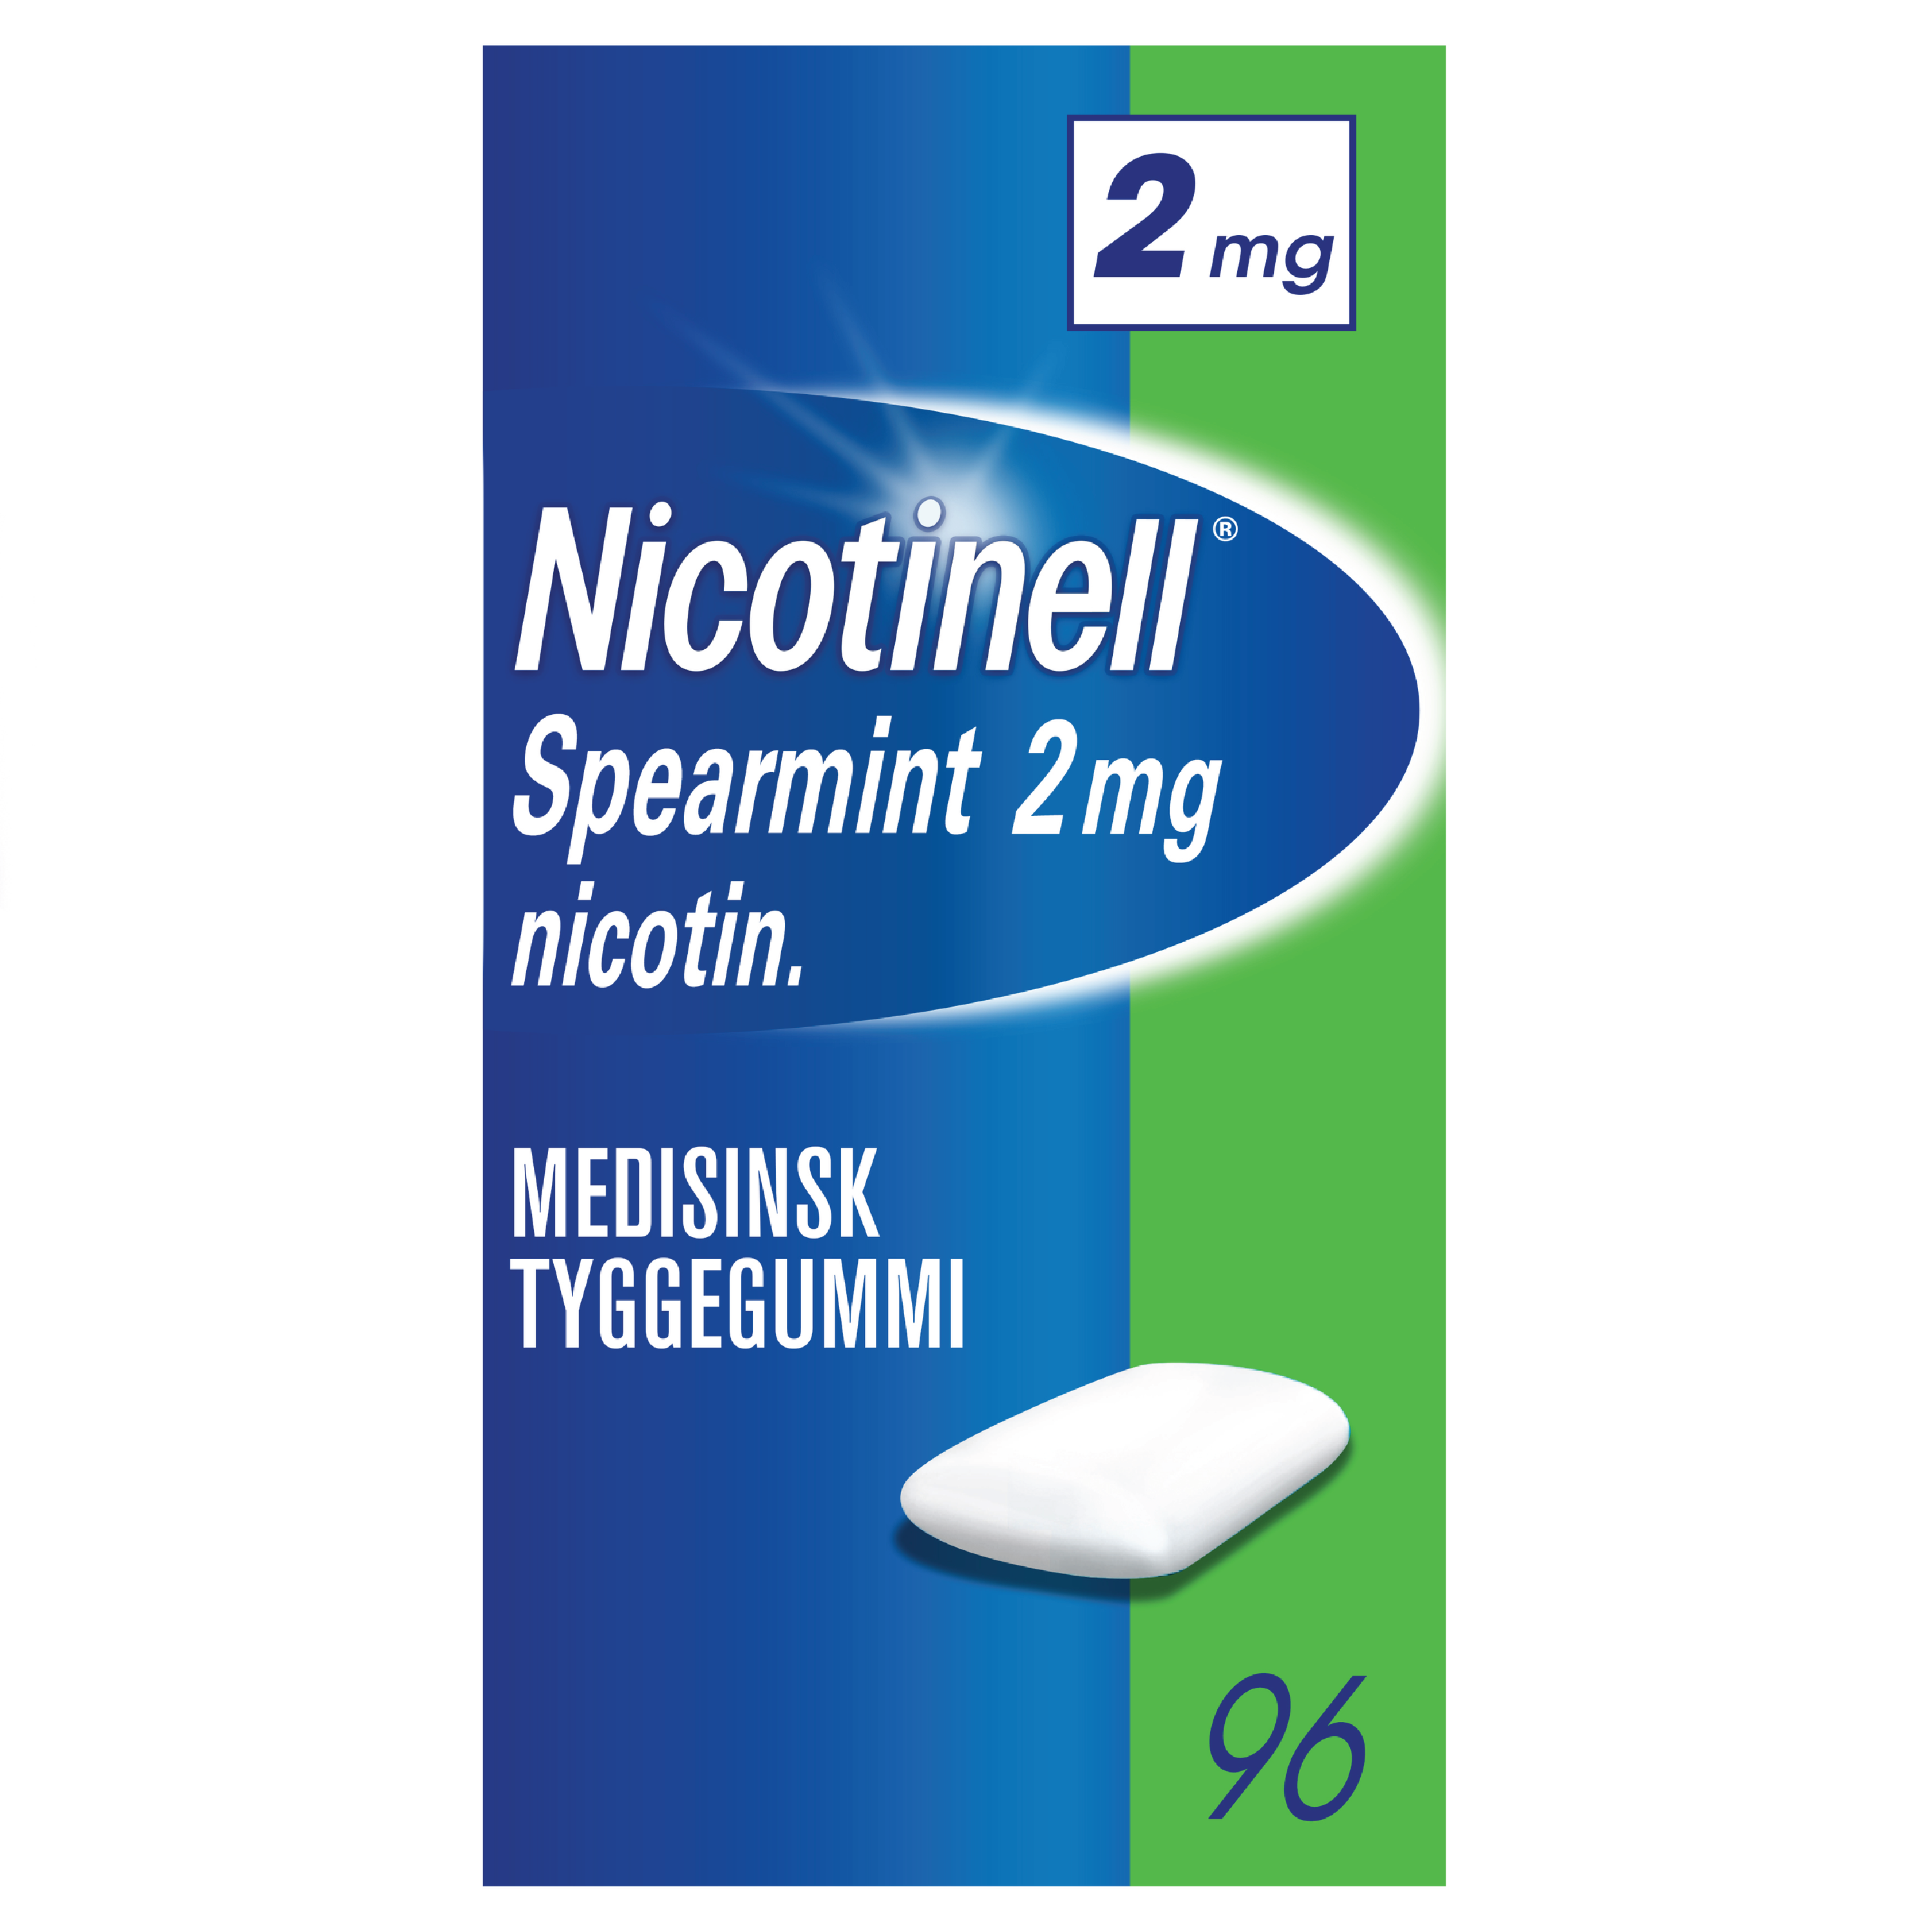 Nicotinell Spearmint Tyggegummi 2mg, Slutte å røyke,  96 stk.